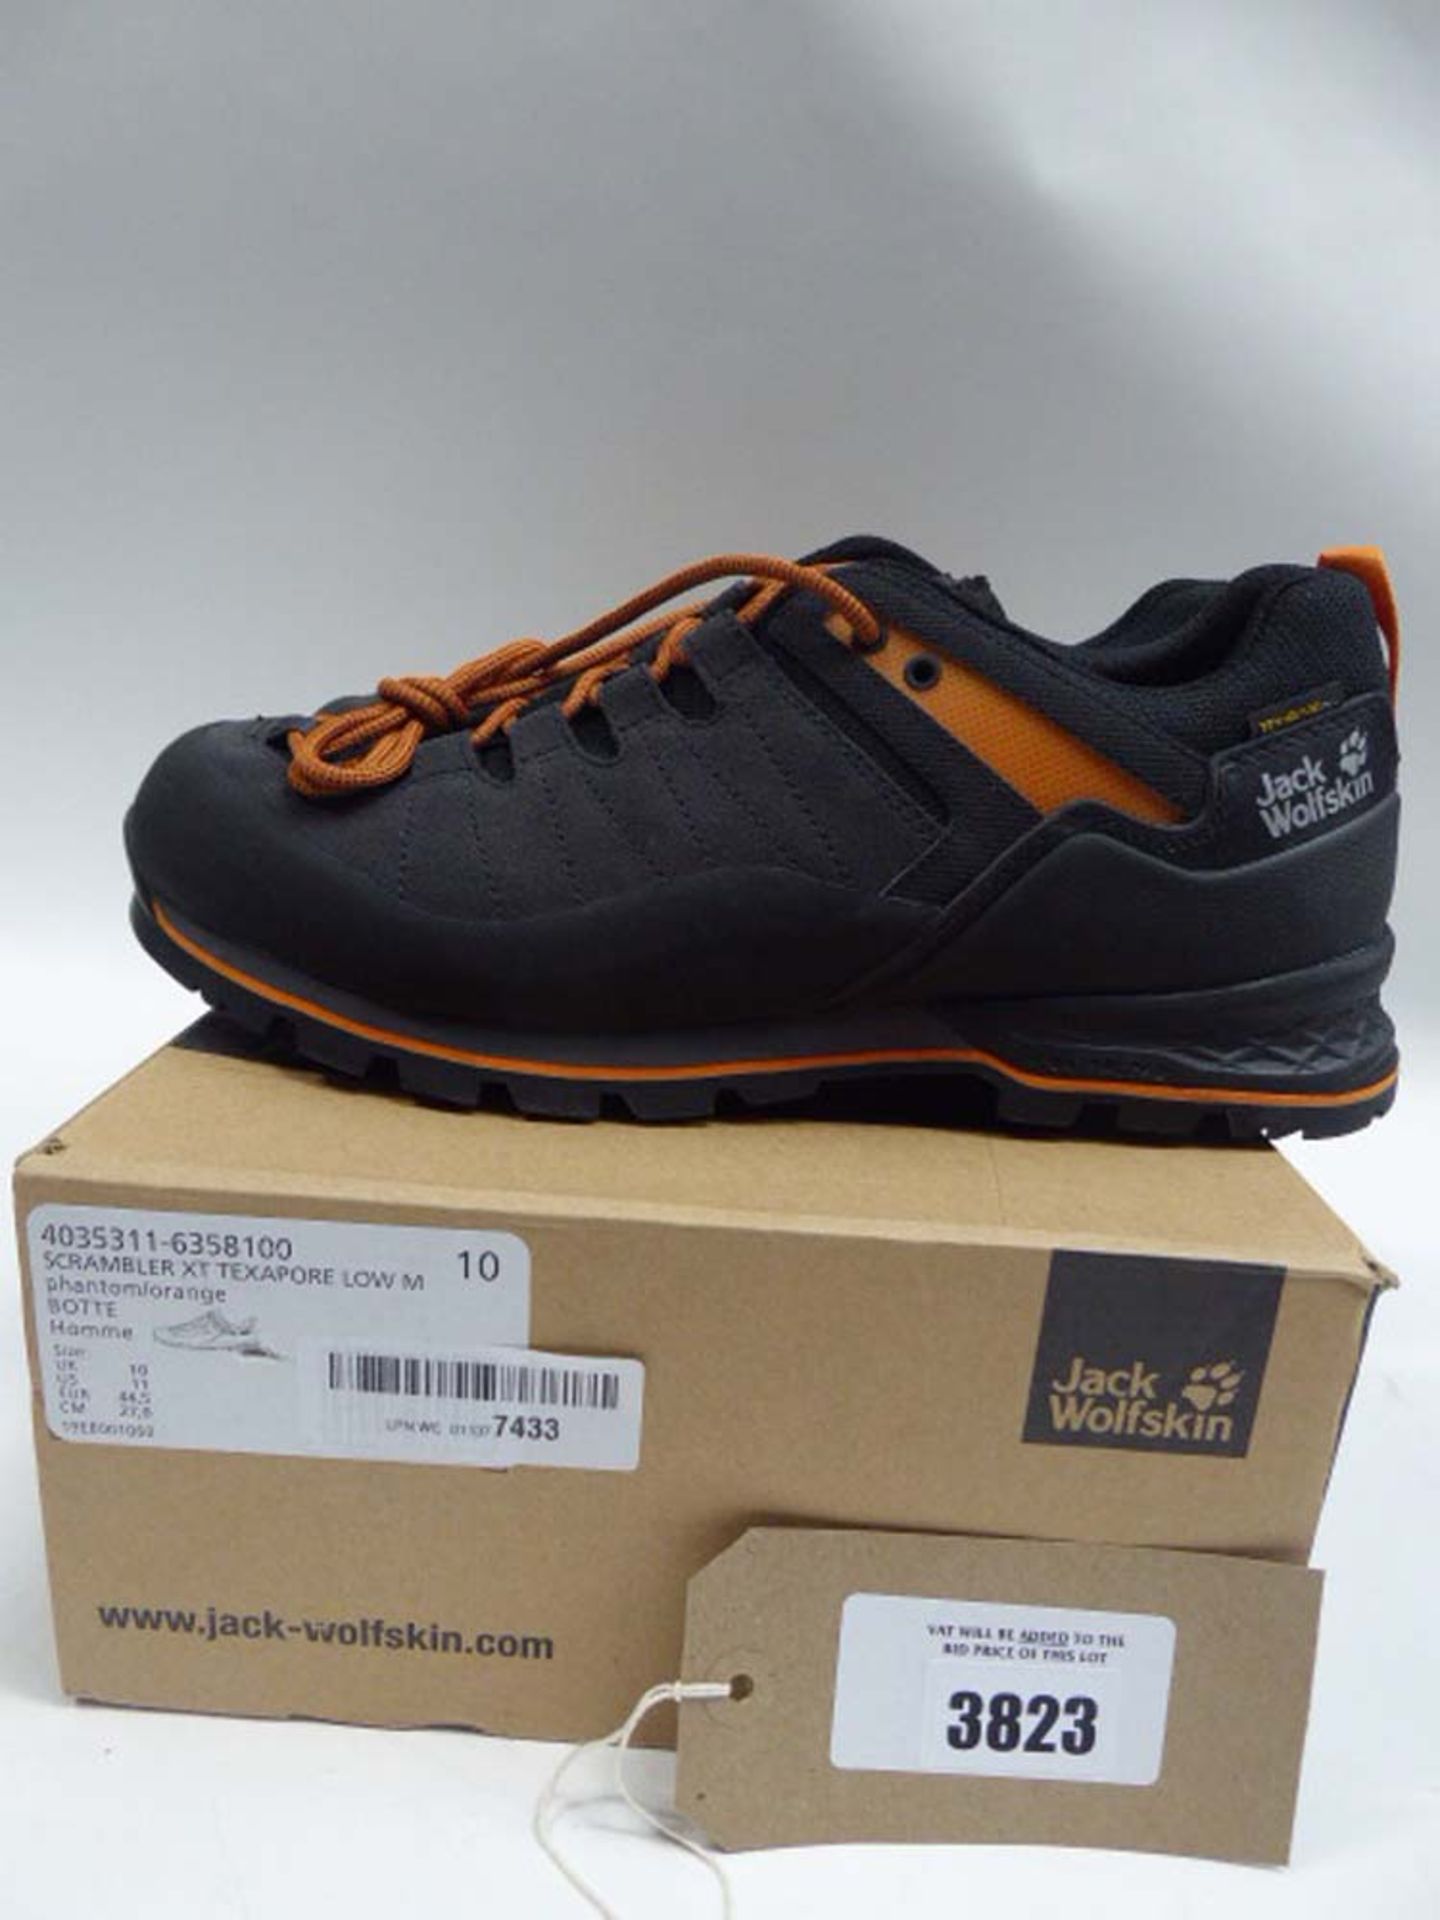 Jack Wolfskin Scrambler XT Terapore Low M Phantom Orange hiking shoes size 10